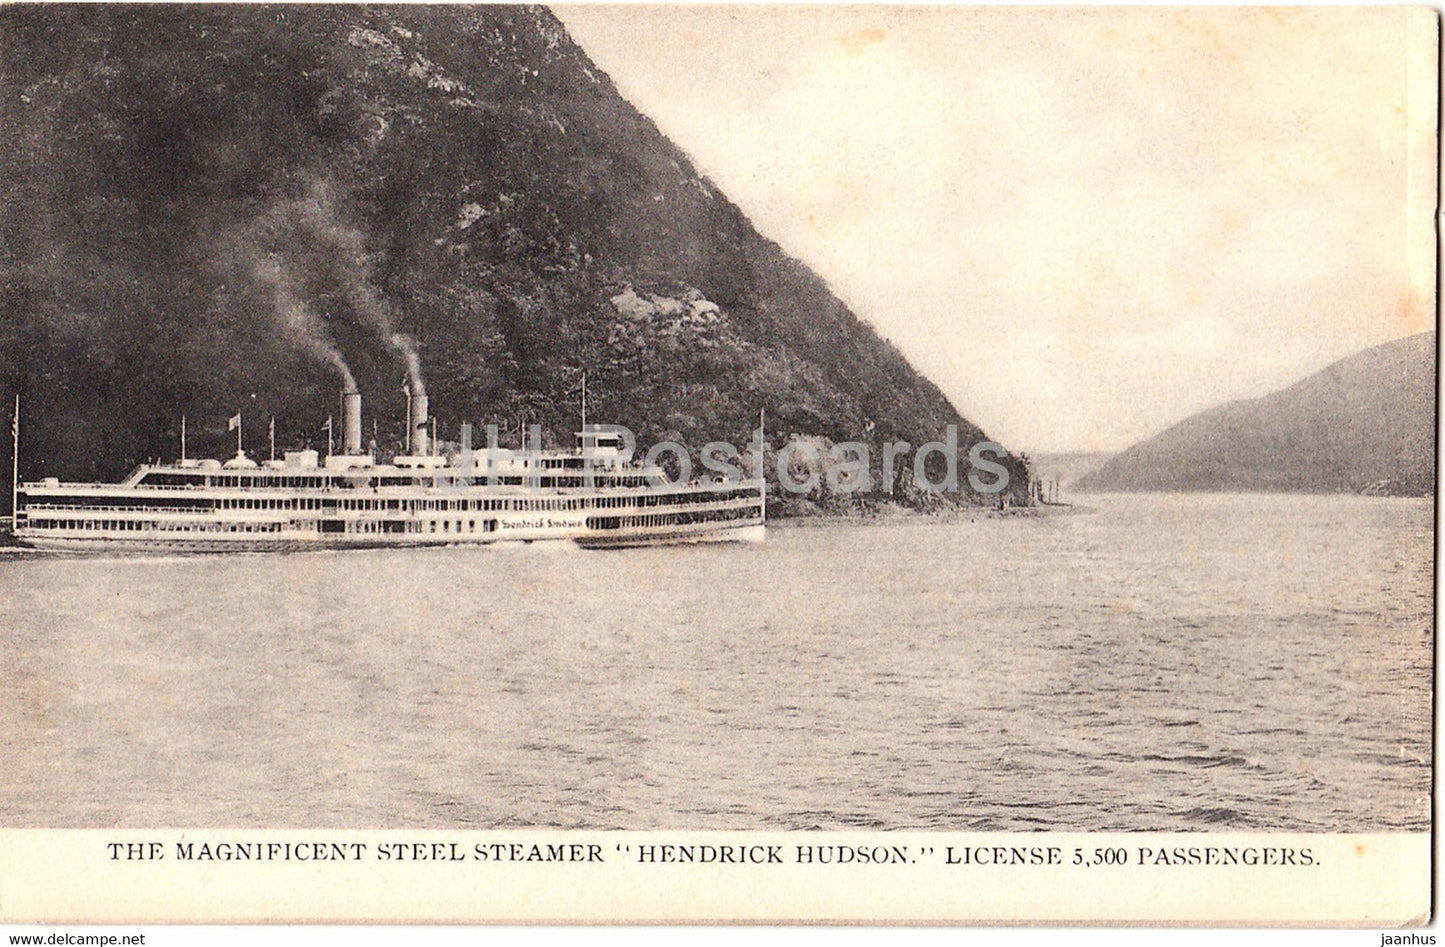 The Magnigicent Steel Steamer Hendrick Hudson - License 5500 Passengers - ship - old postcard - United Kingdom - unused - JH Postcards